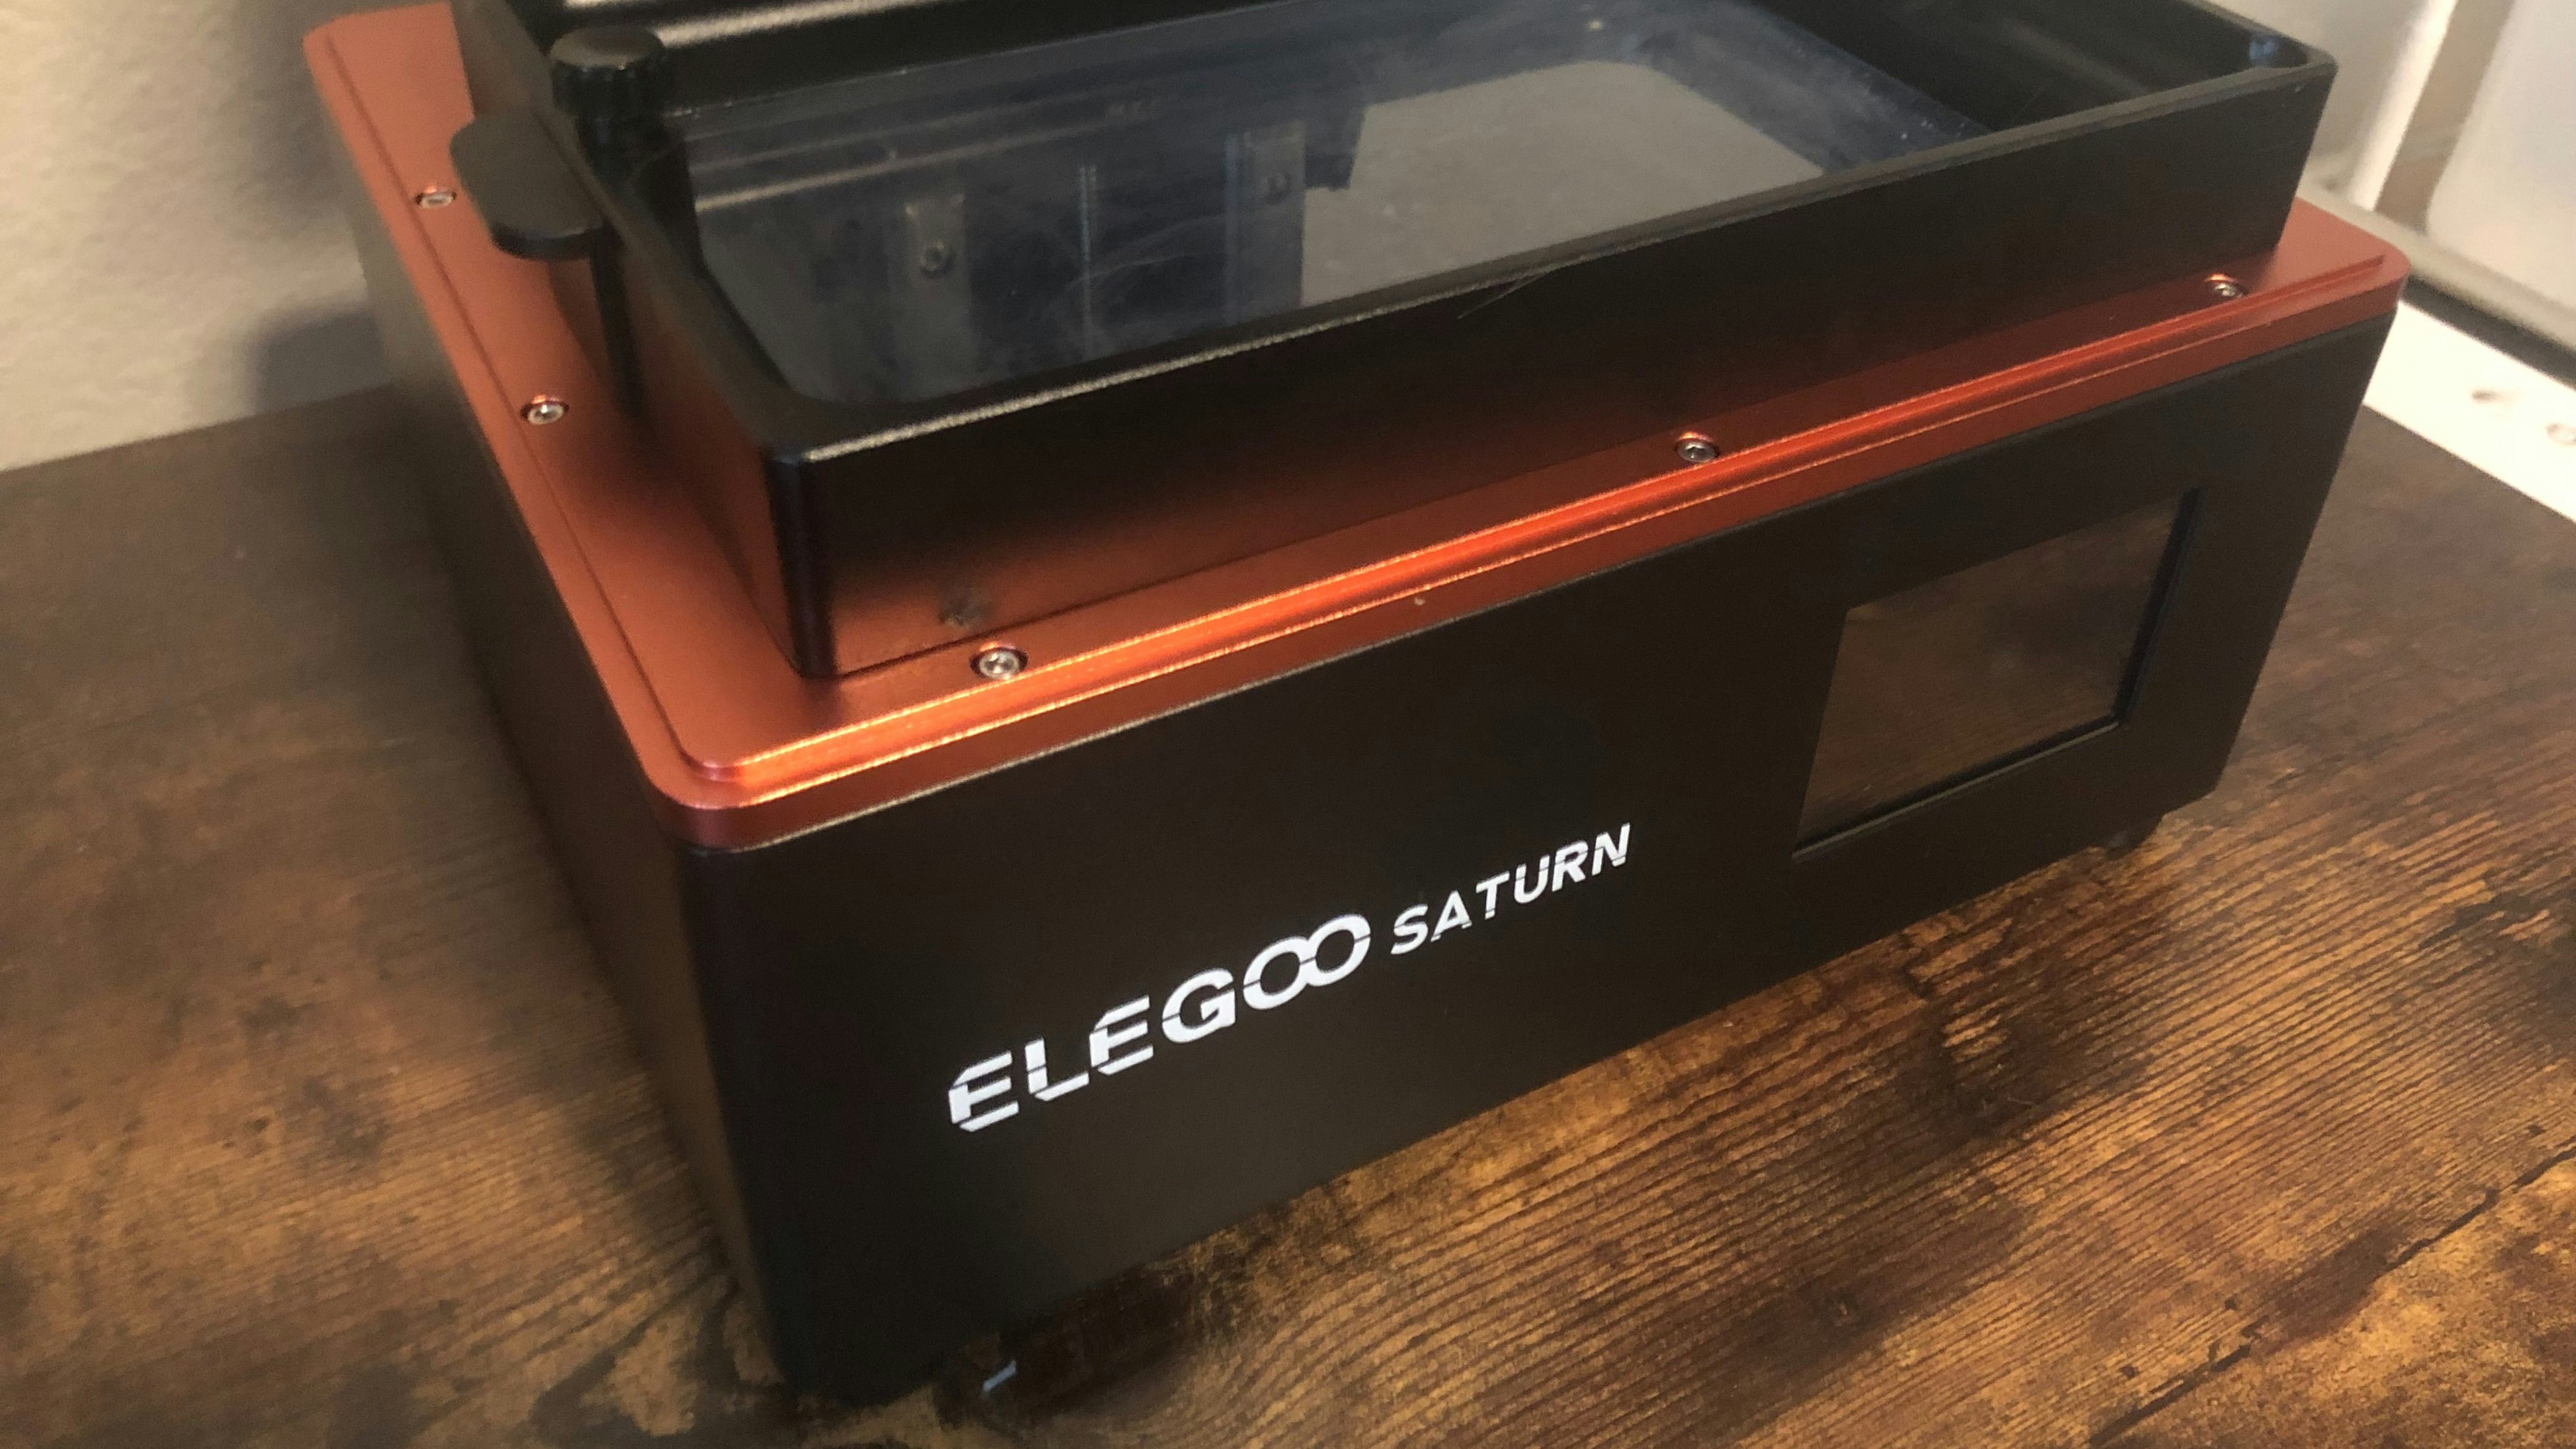 ELEGOO Saturn 4K Resin 3D Printer